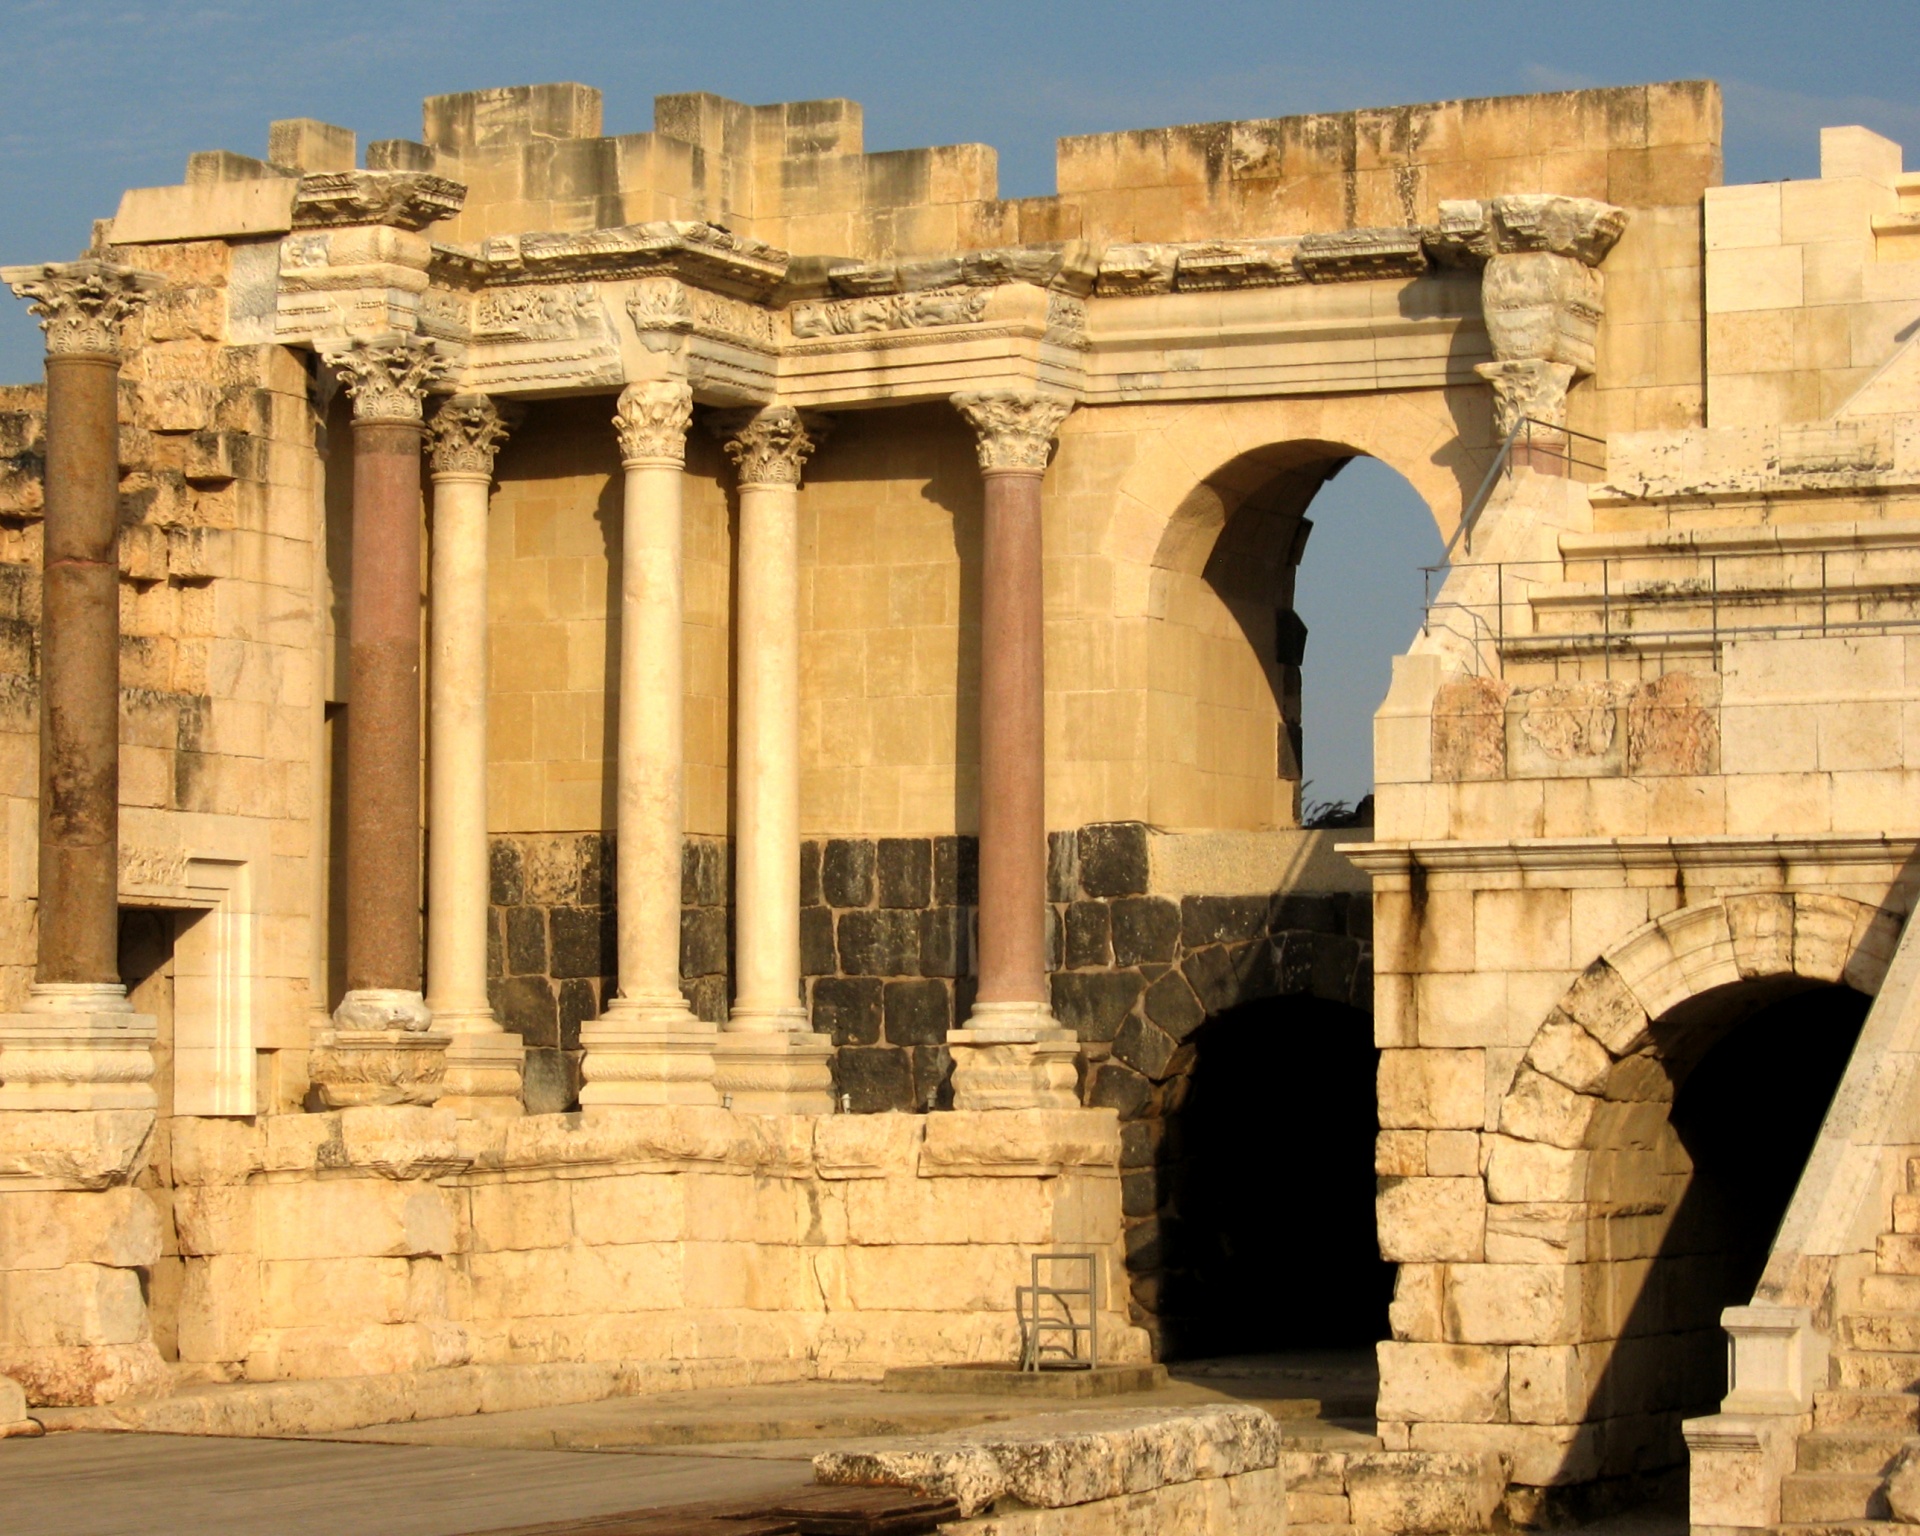 Roman Amphitheater ruins in Beit She'an Israel